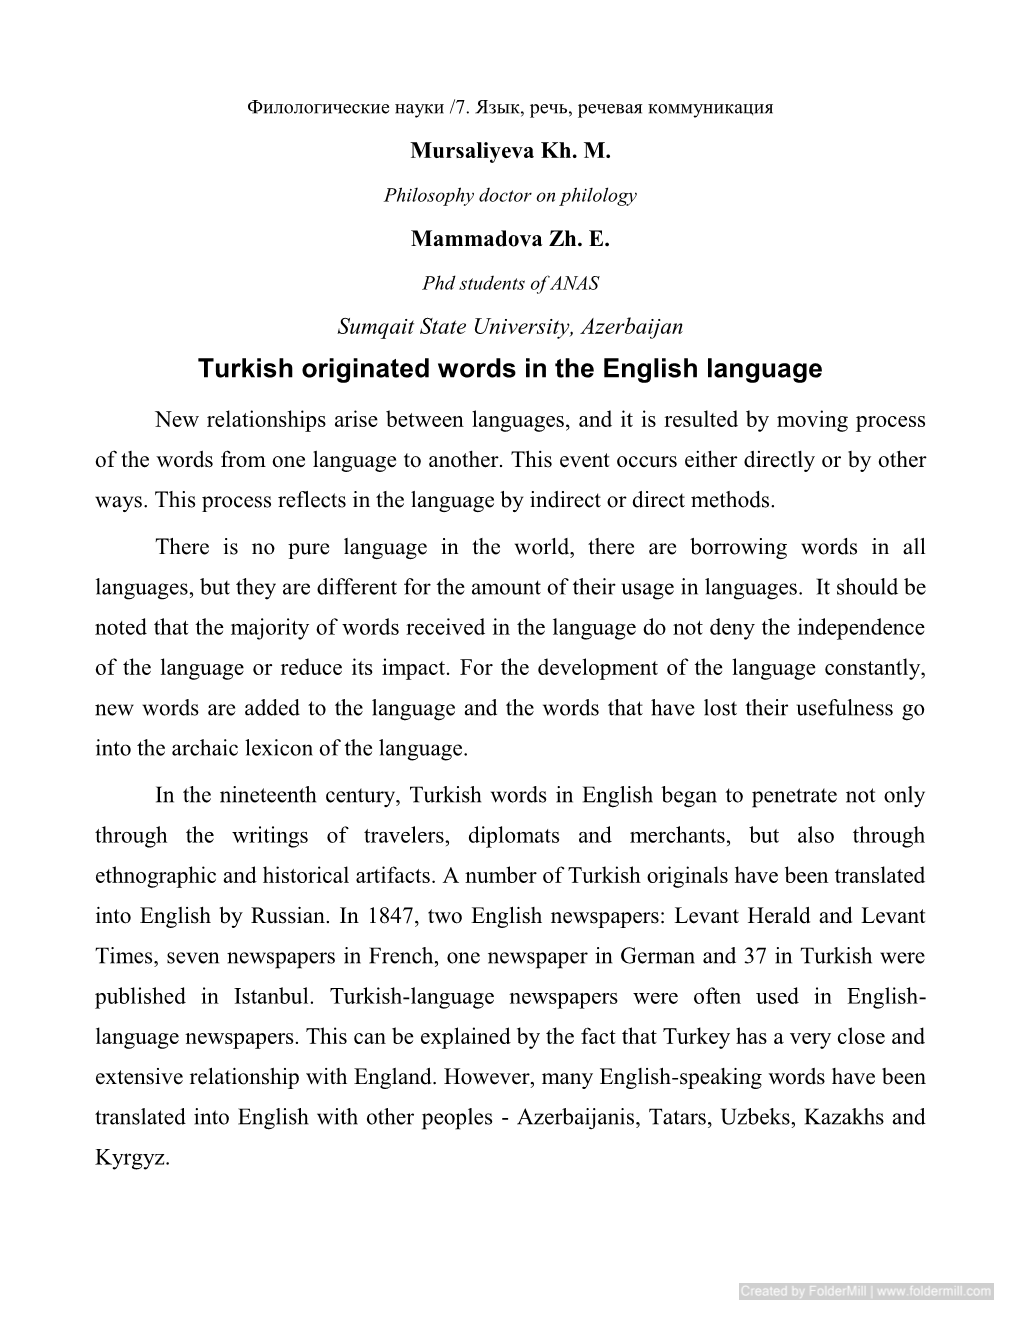 Turkish Originated Words in the English Language